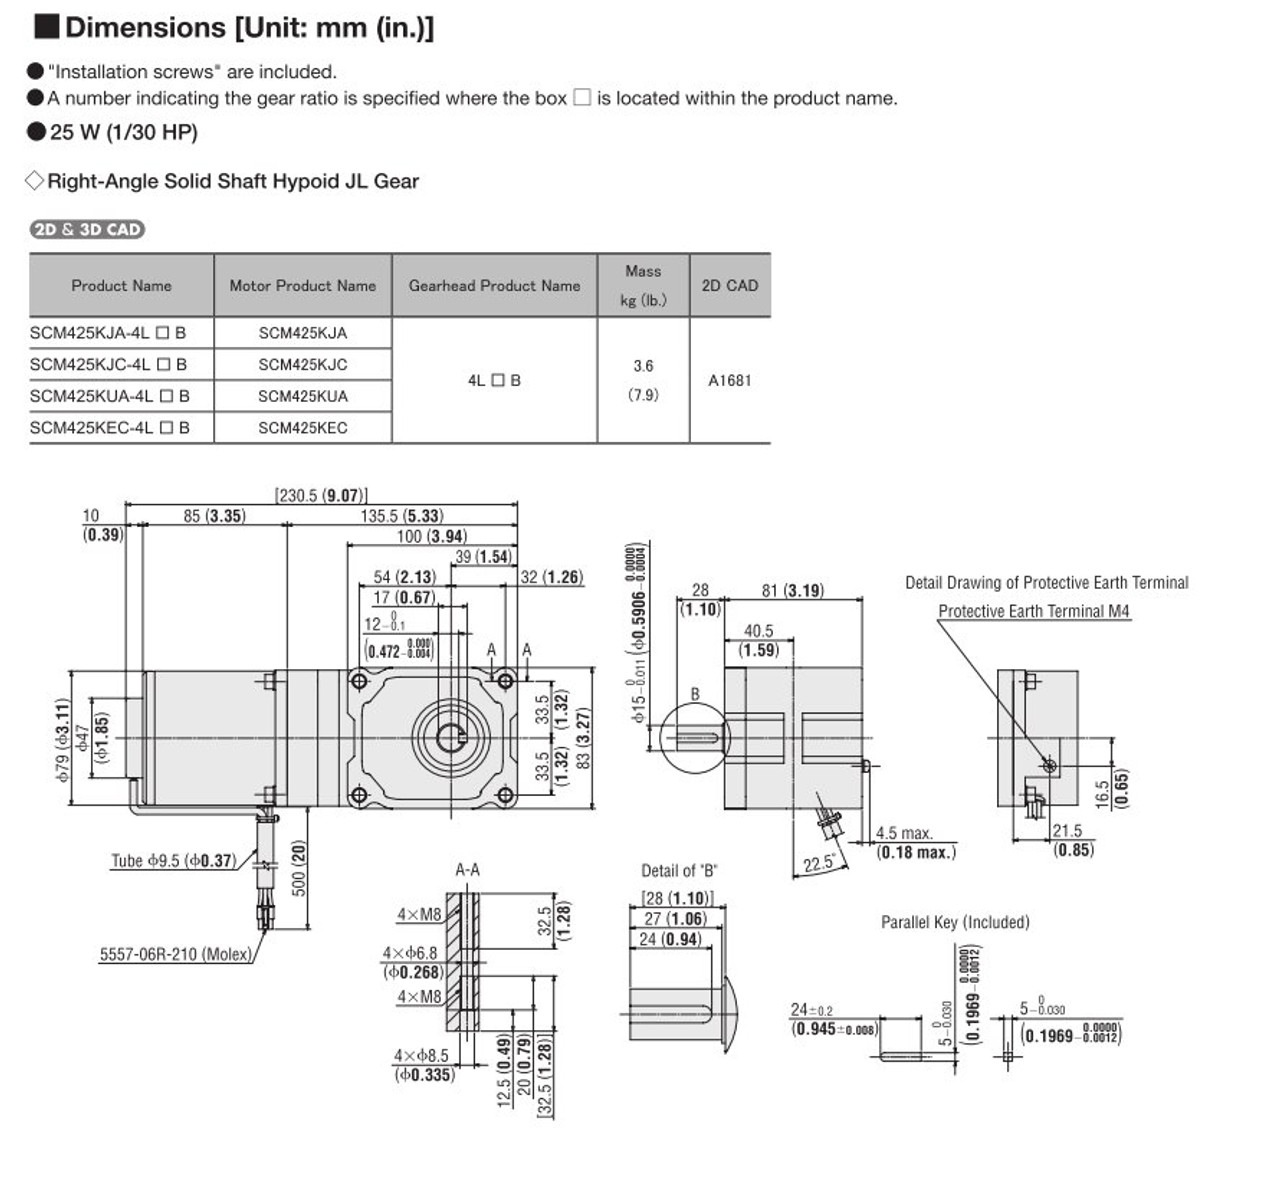 SCM425KUA-4L20B - Dimensions